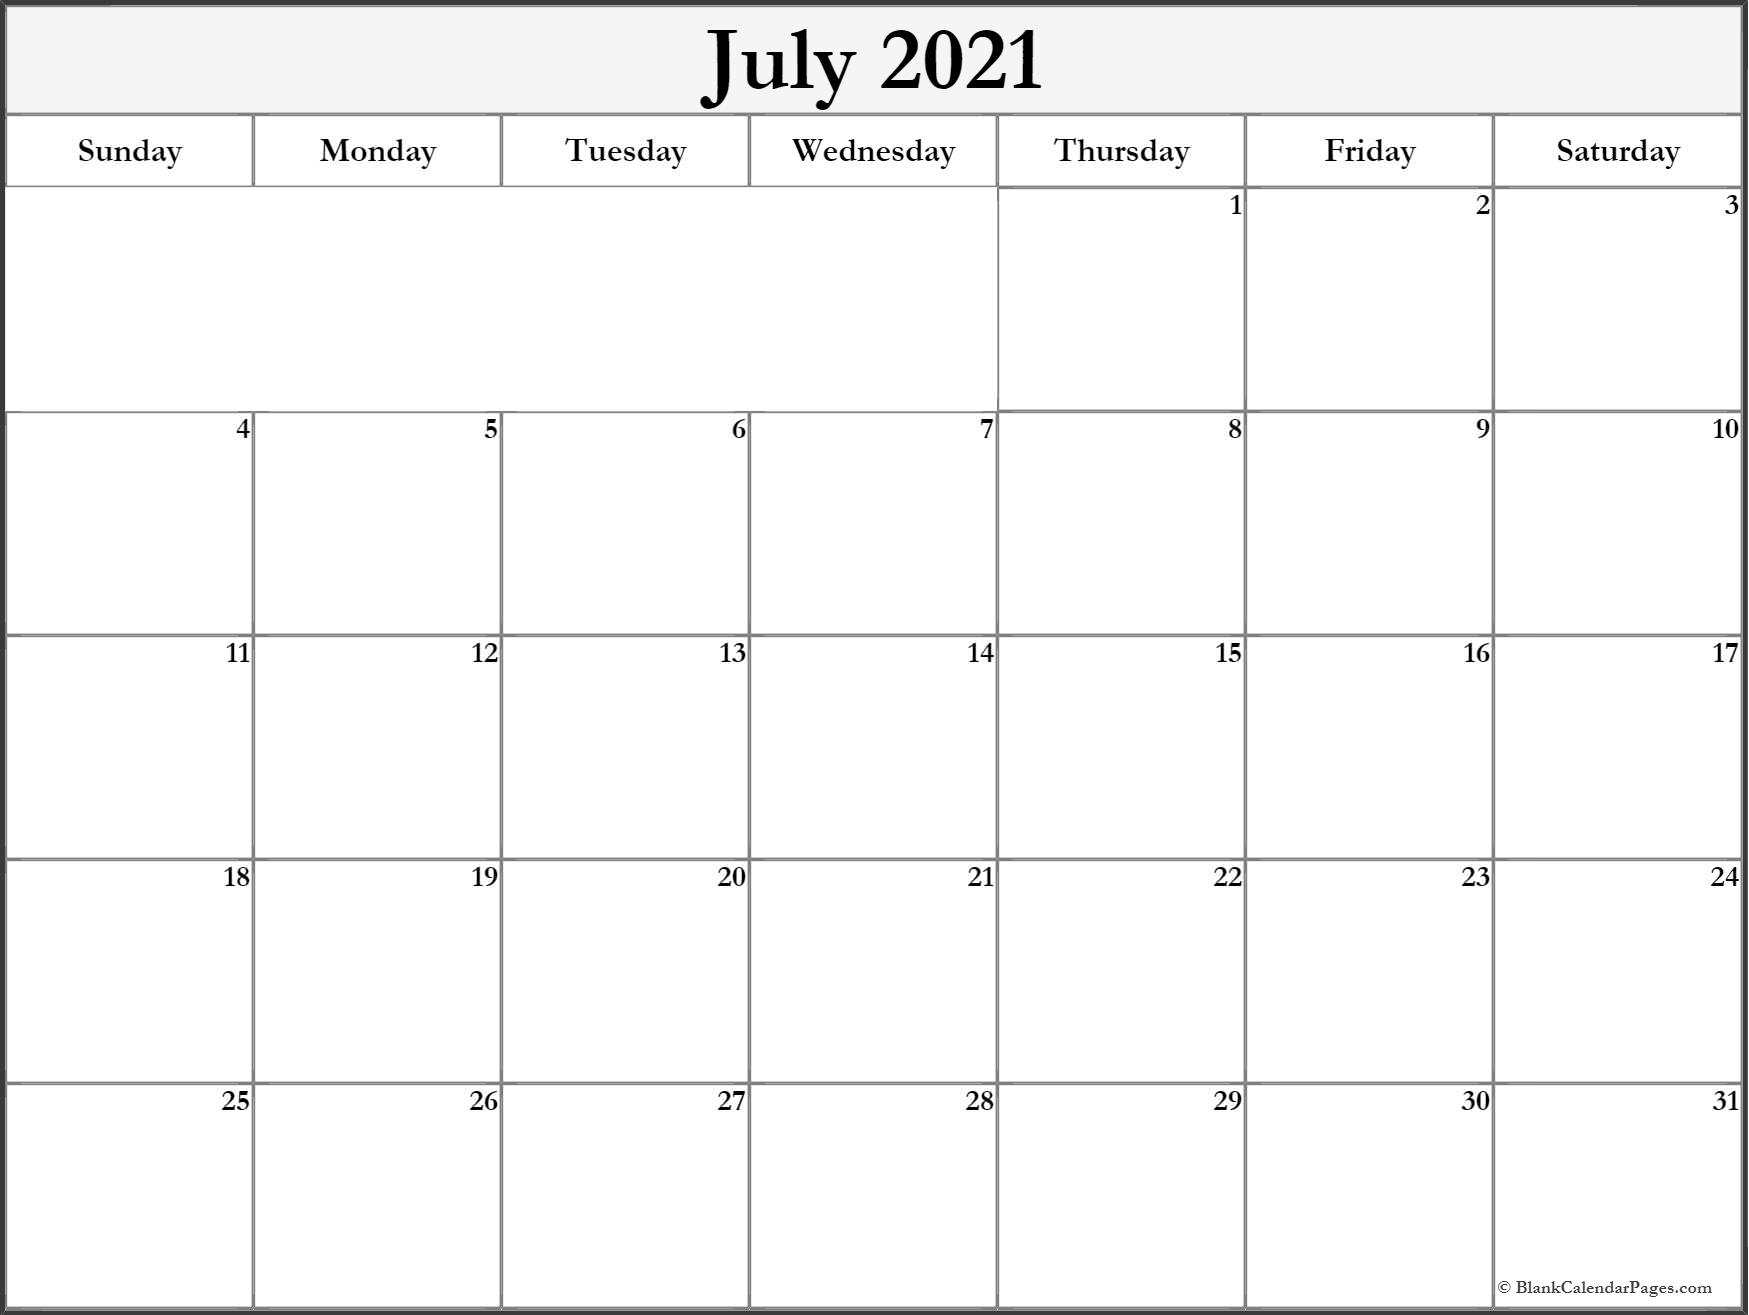 July 2021 Blank Calendar Templates.